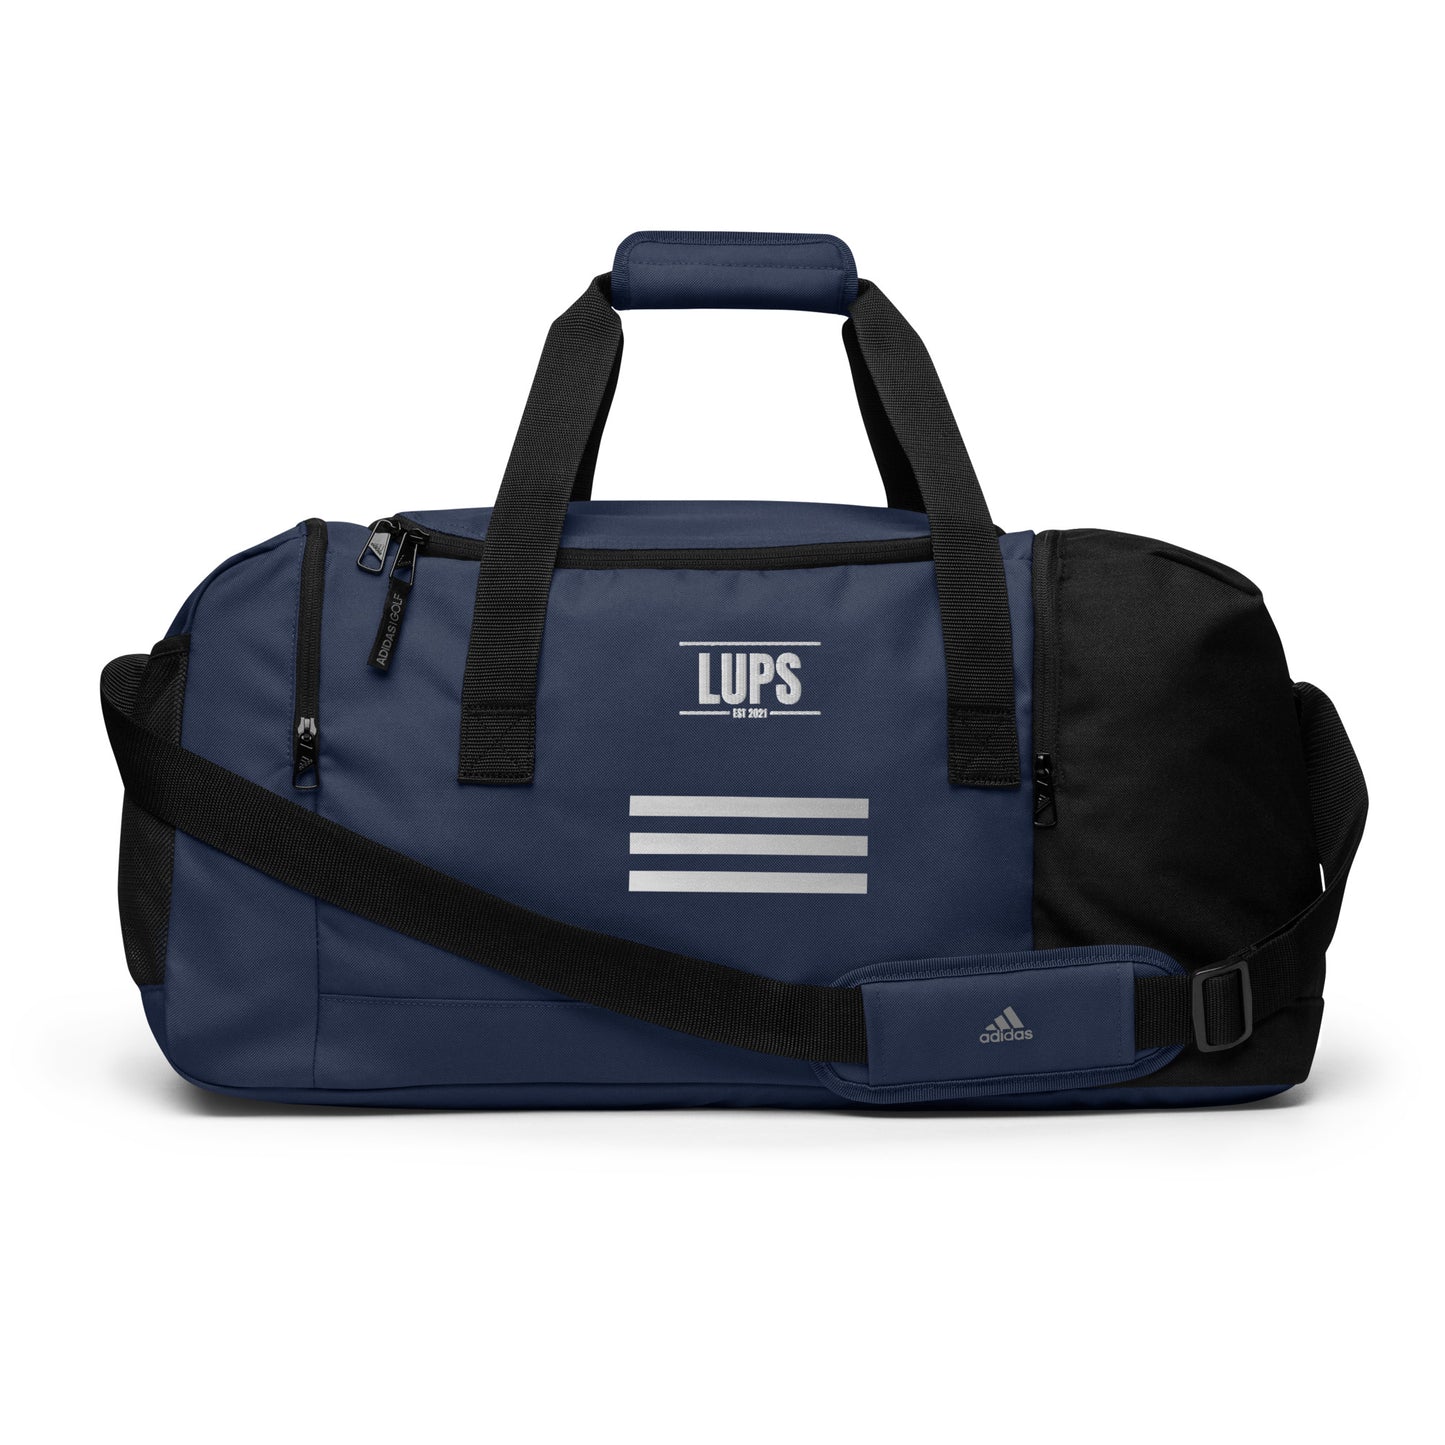 ADIDAS x LUPS Duffle Bag